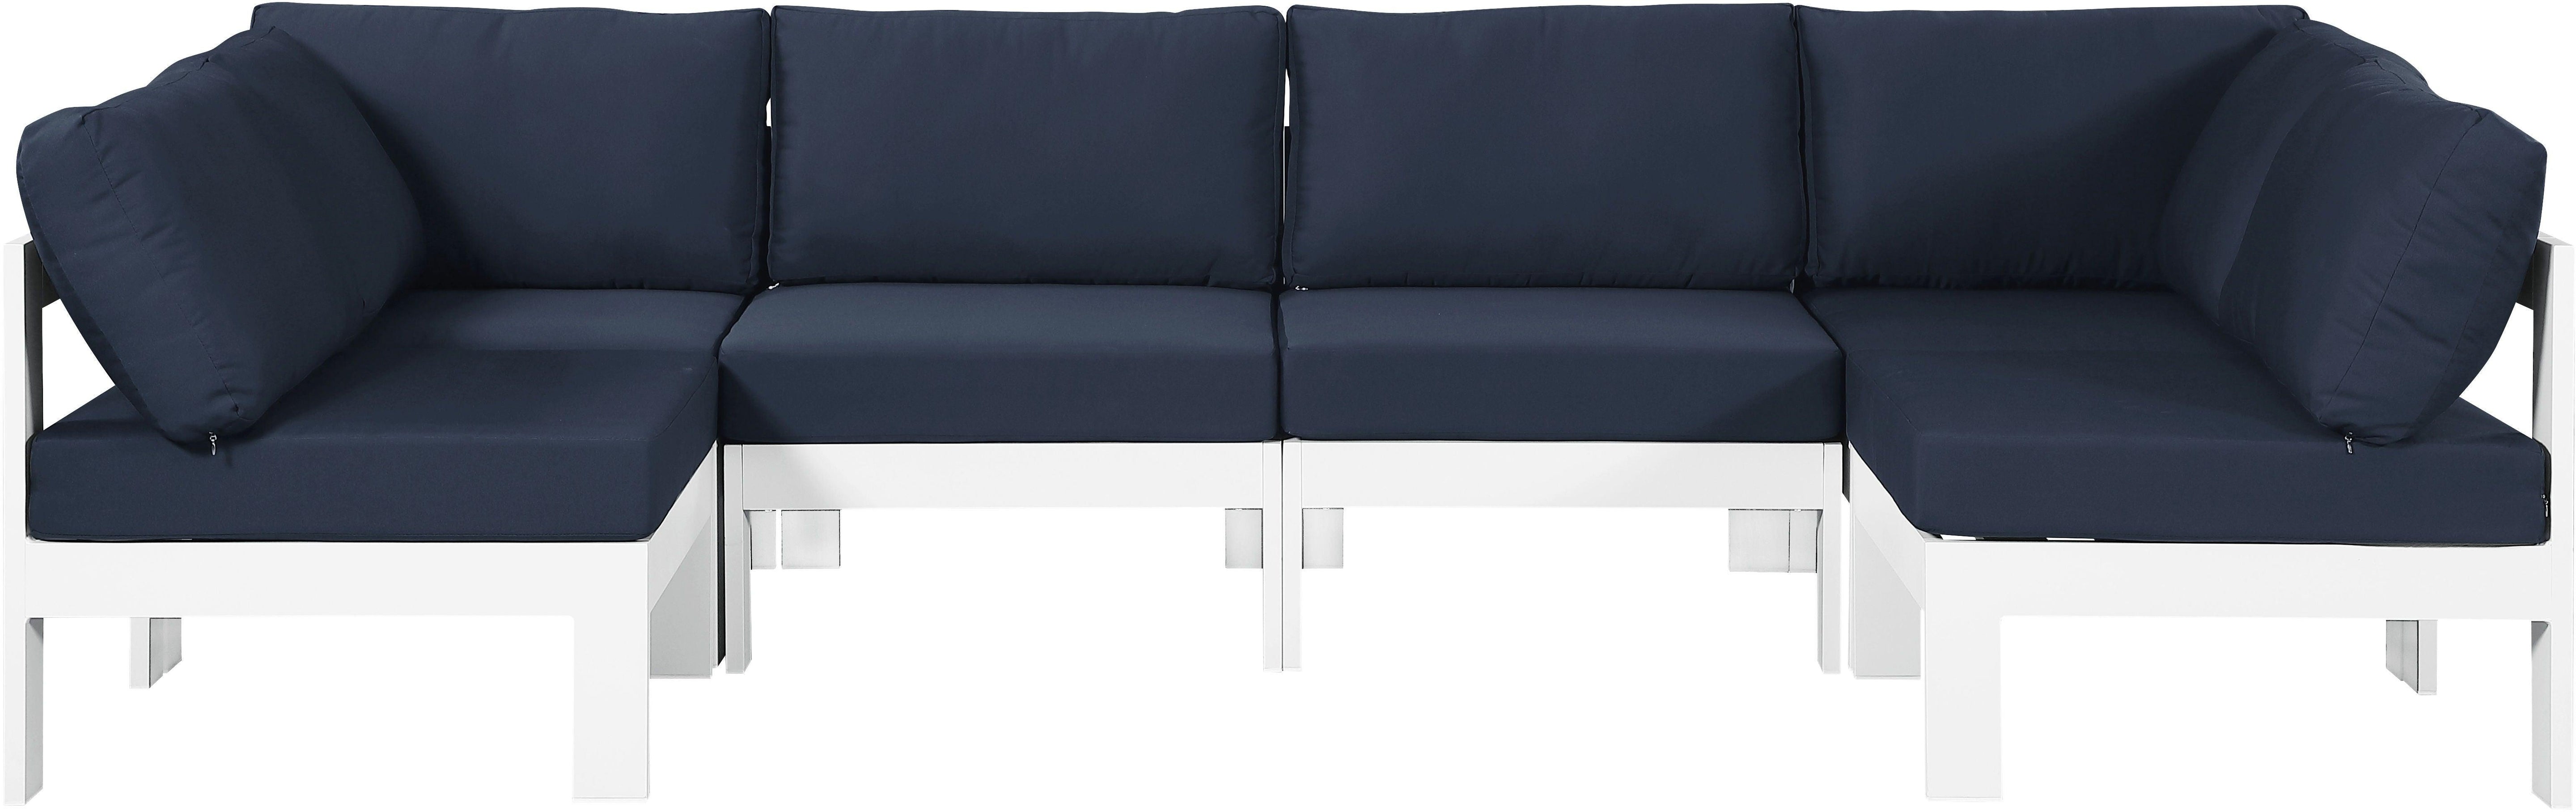 Meridian Furniture - Nizuc - Outdoor Patio Modular Sectional 6 Piece - Navy - Fabric - 5th Avenue Furniture